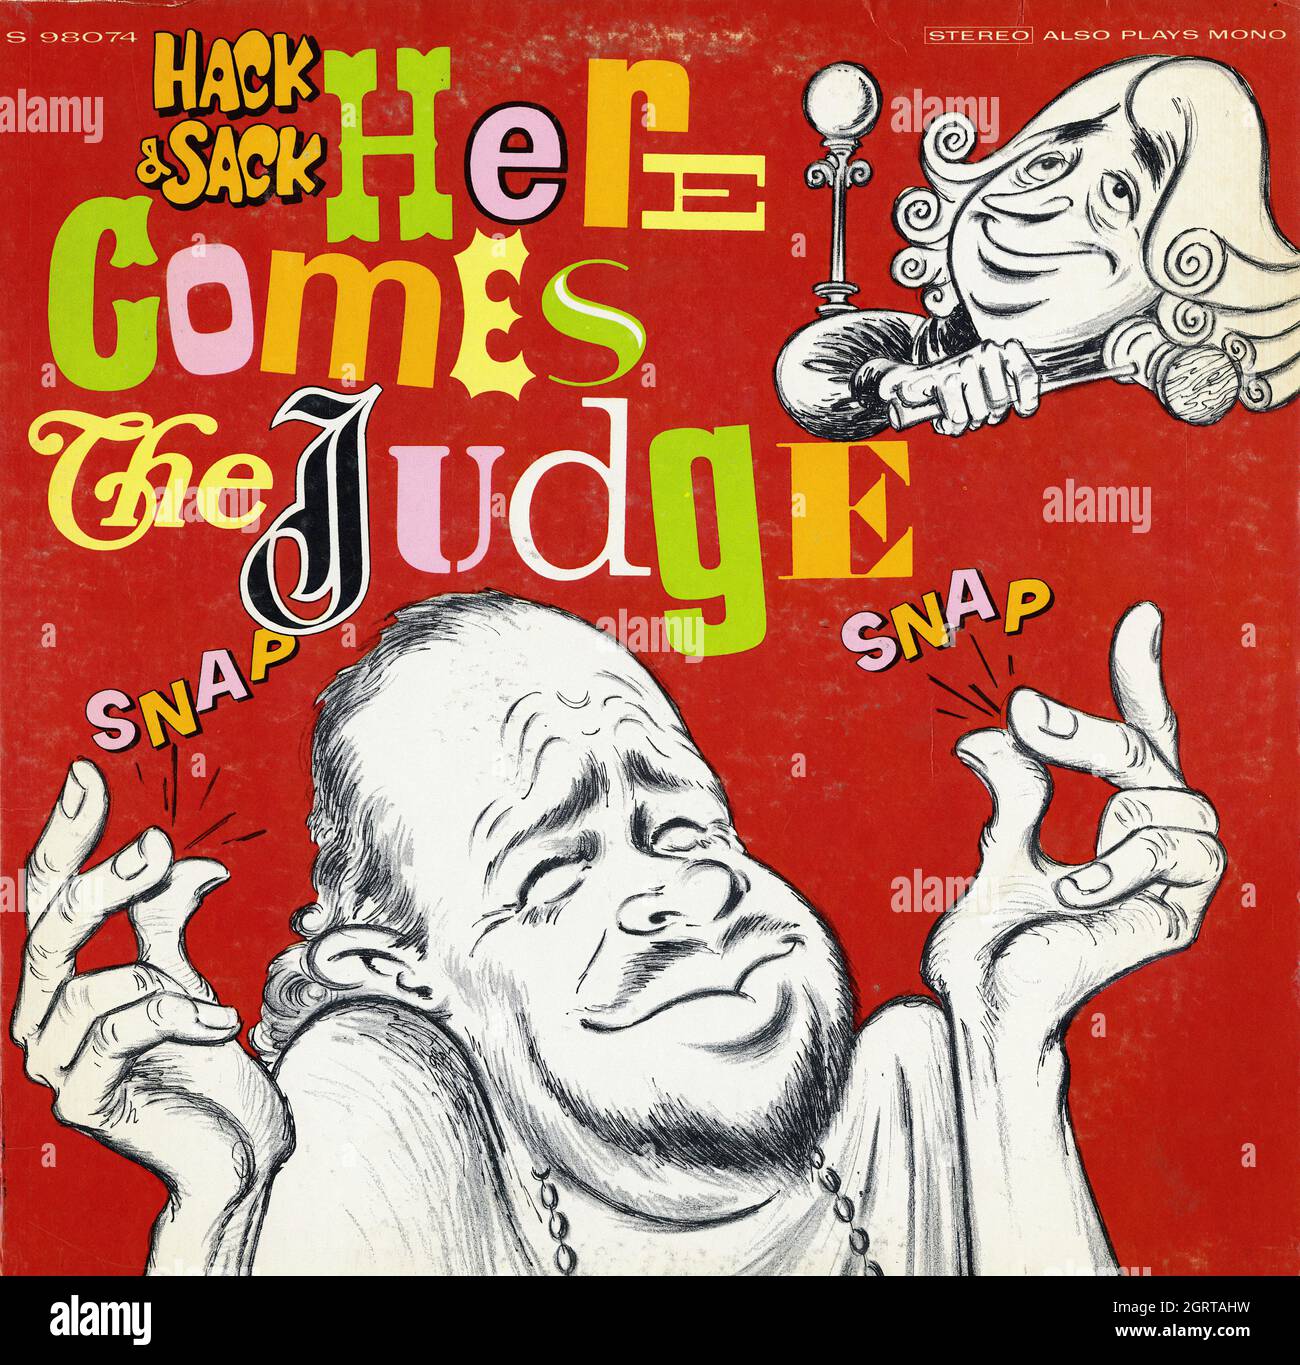 Hack & Jack - Here Comes The Judge - Vintage American Comedy Vinyl